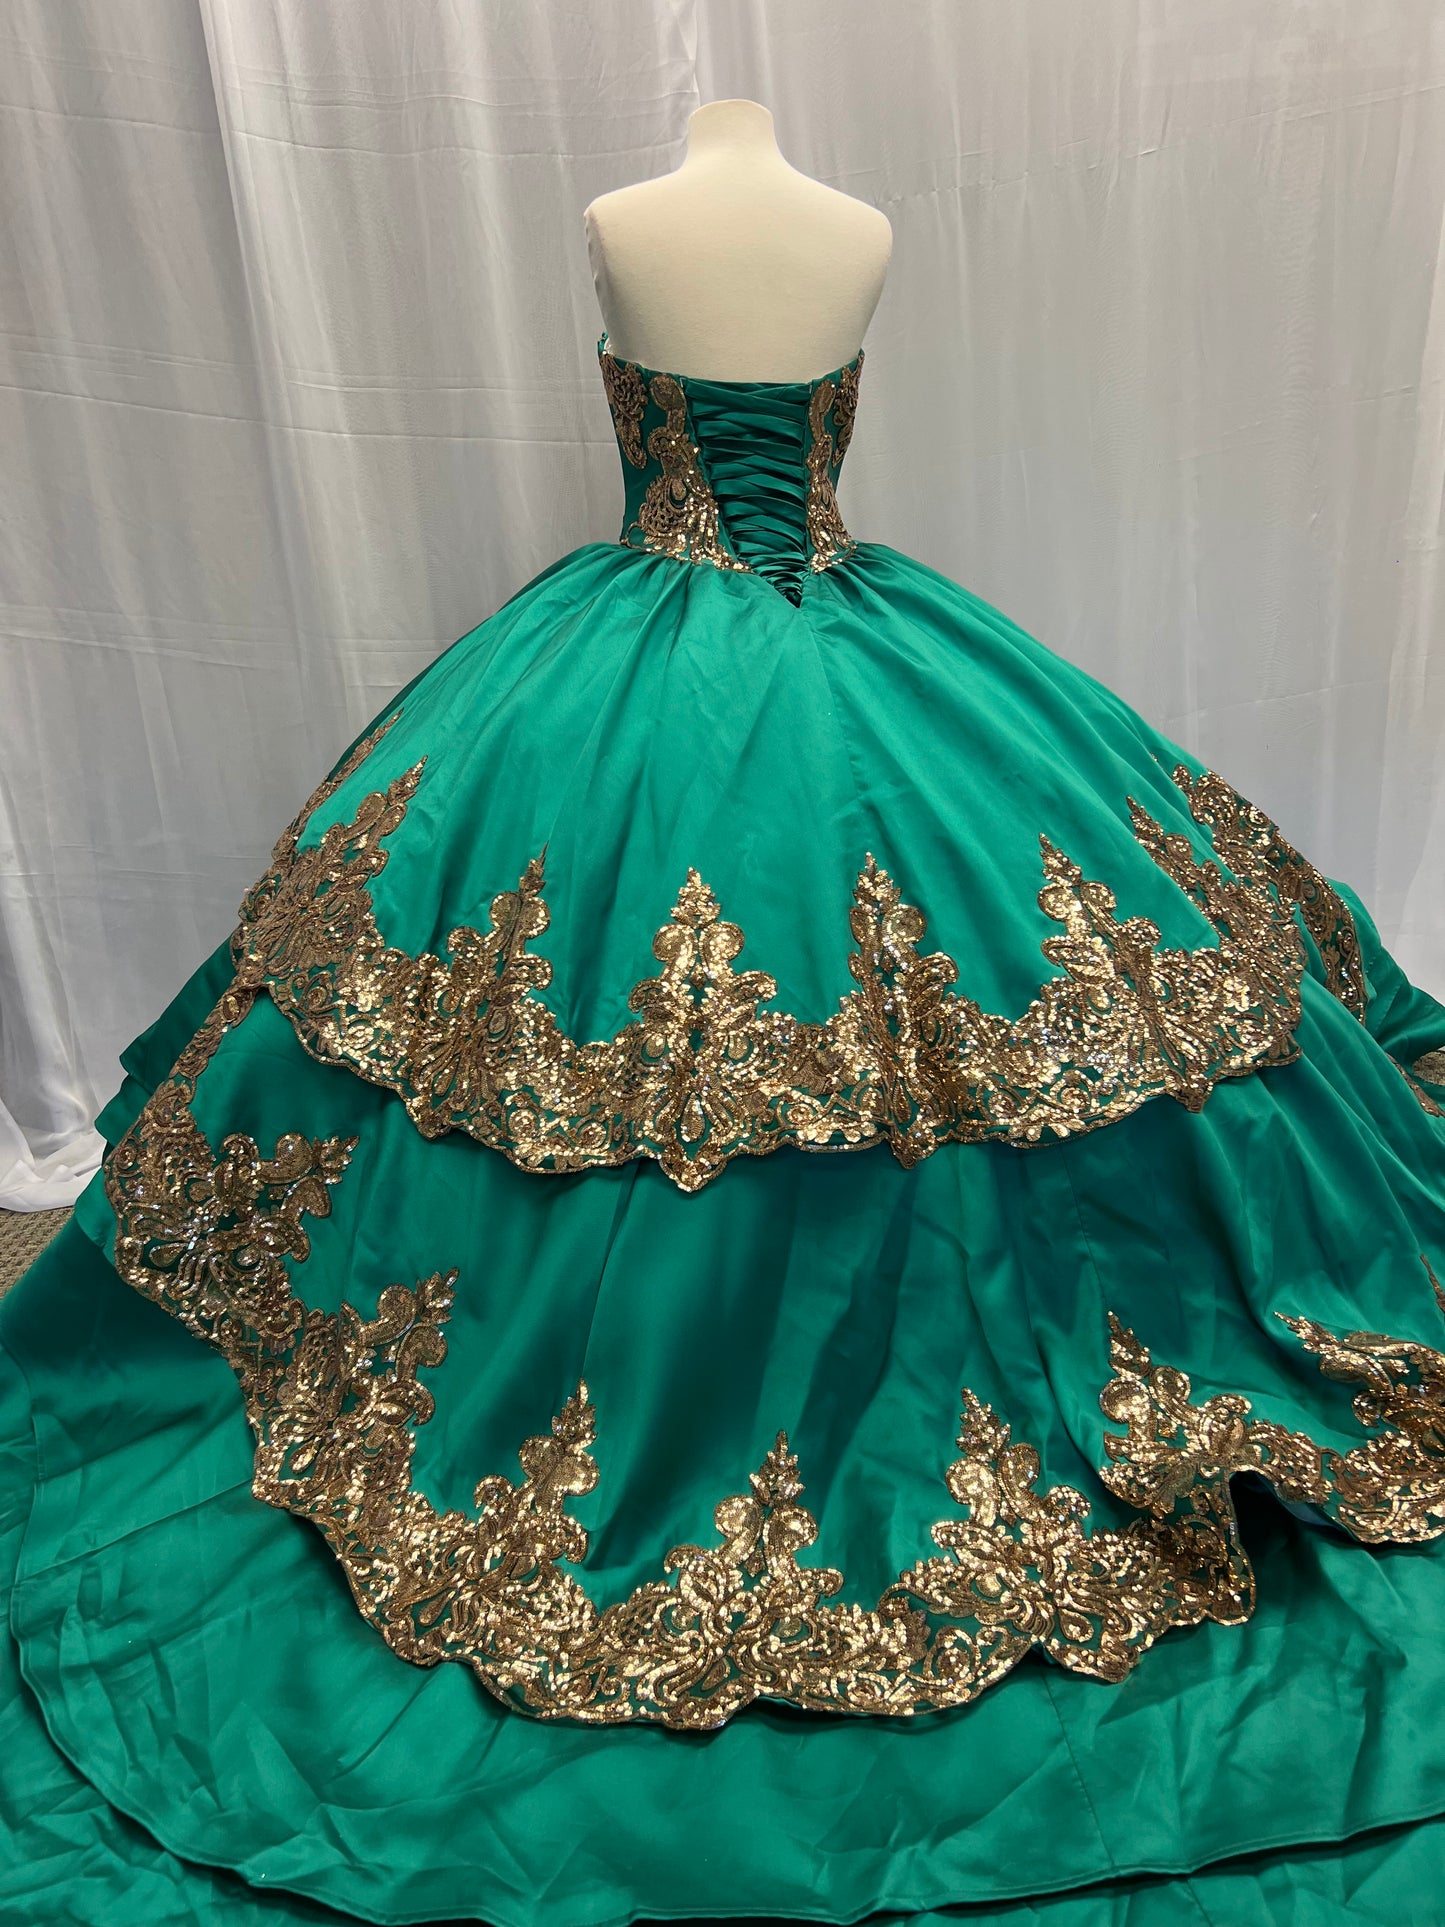 Mary's Emerald Dress #MQ3030